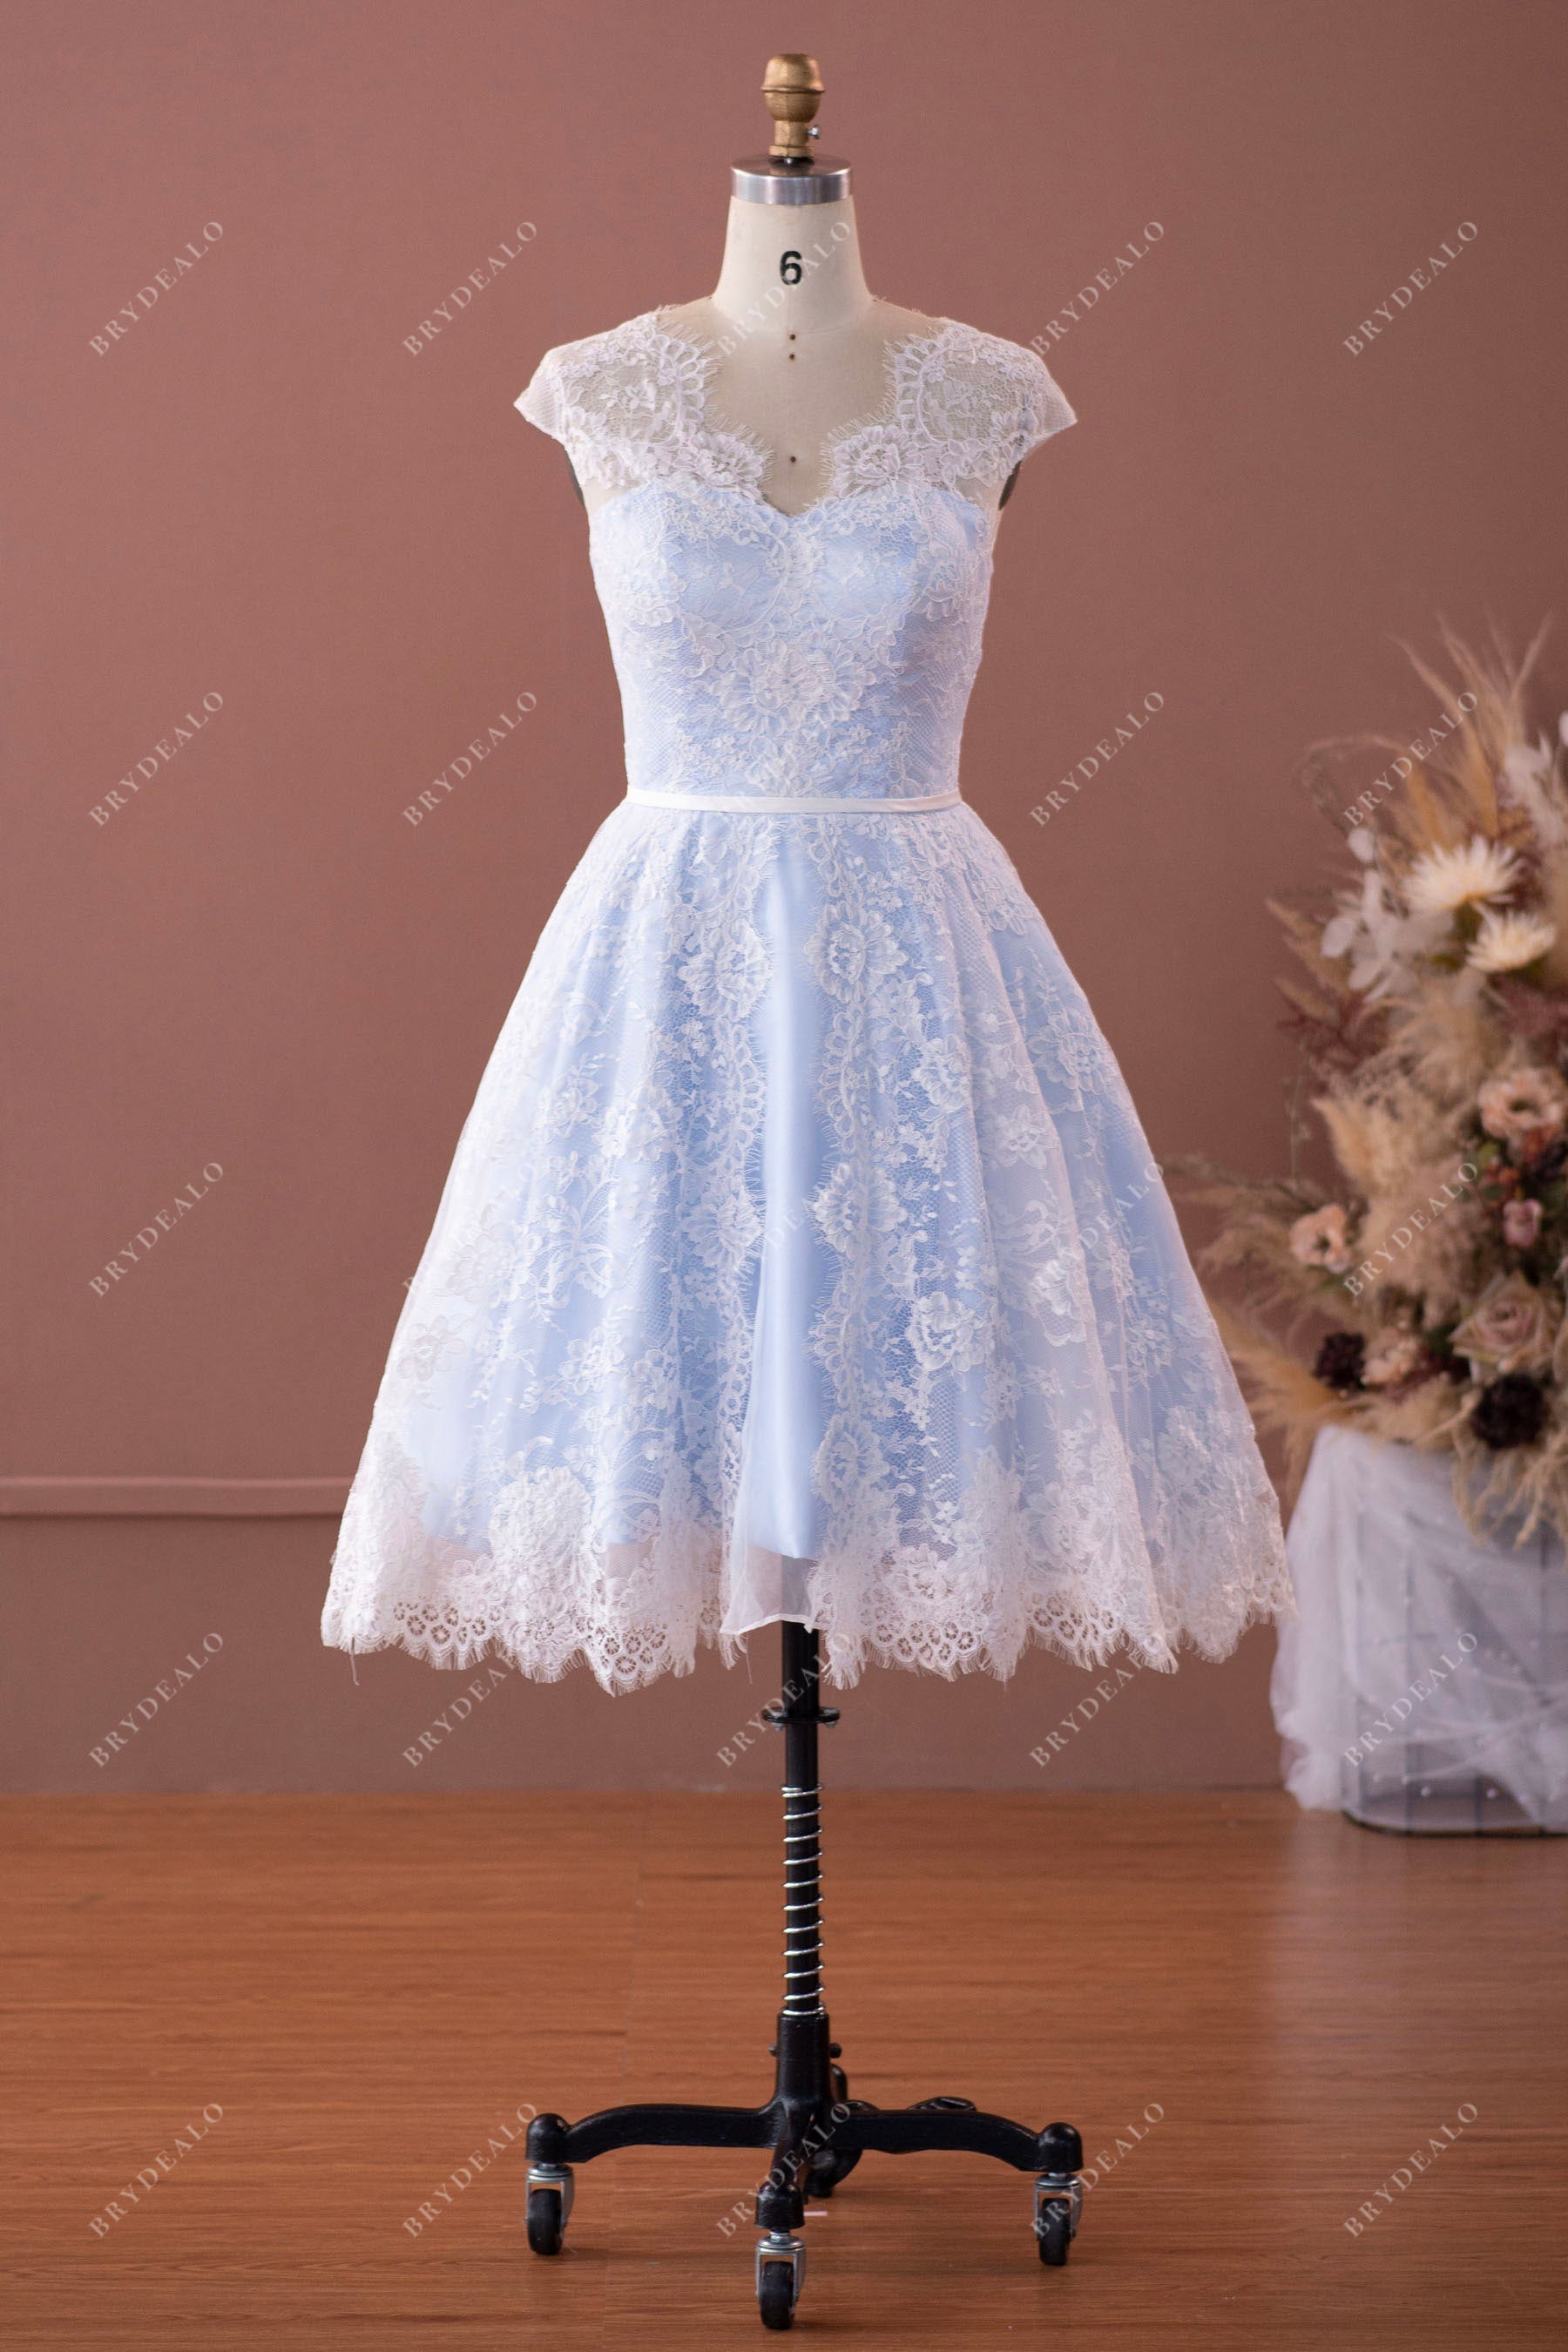 Vintage Lace Sky Blue Cap Sleeve Tea Length Wedding Dress Sample